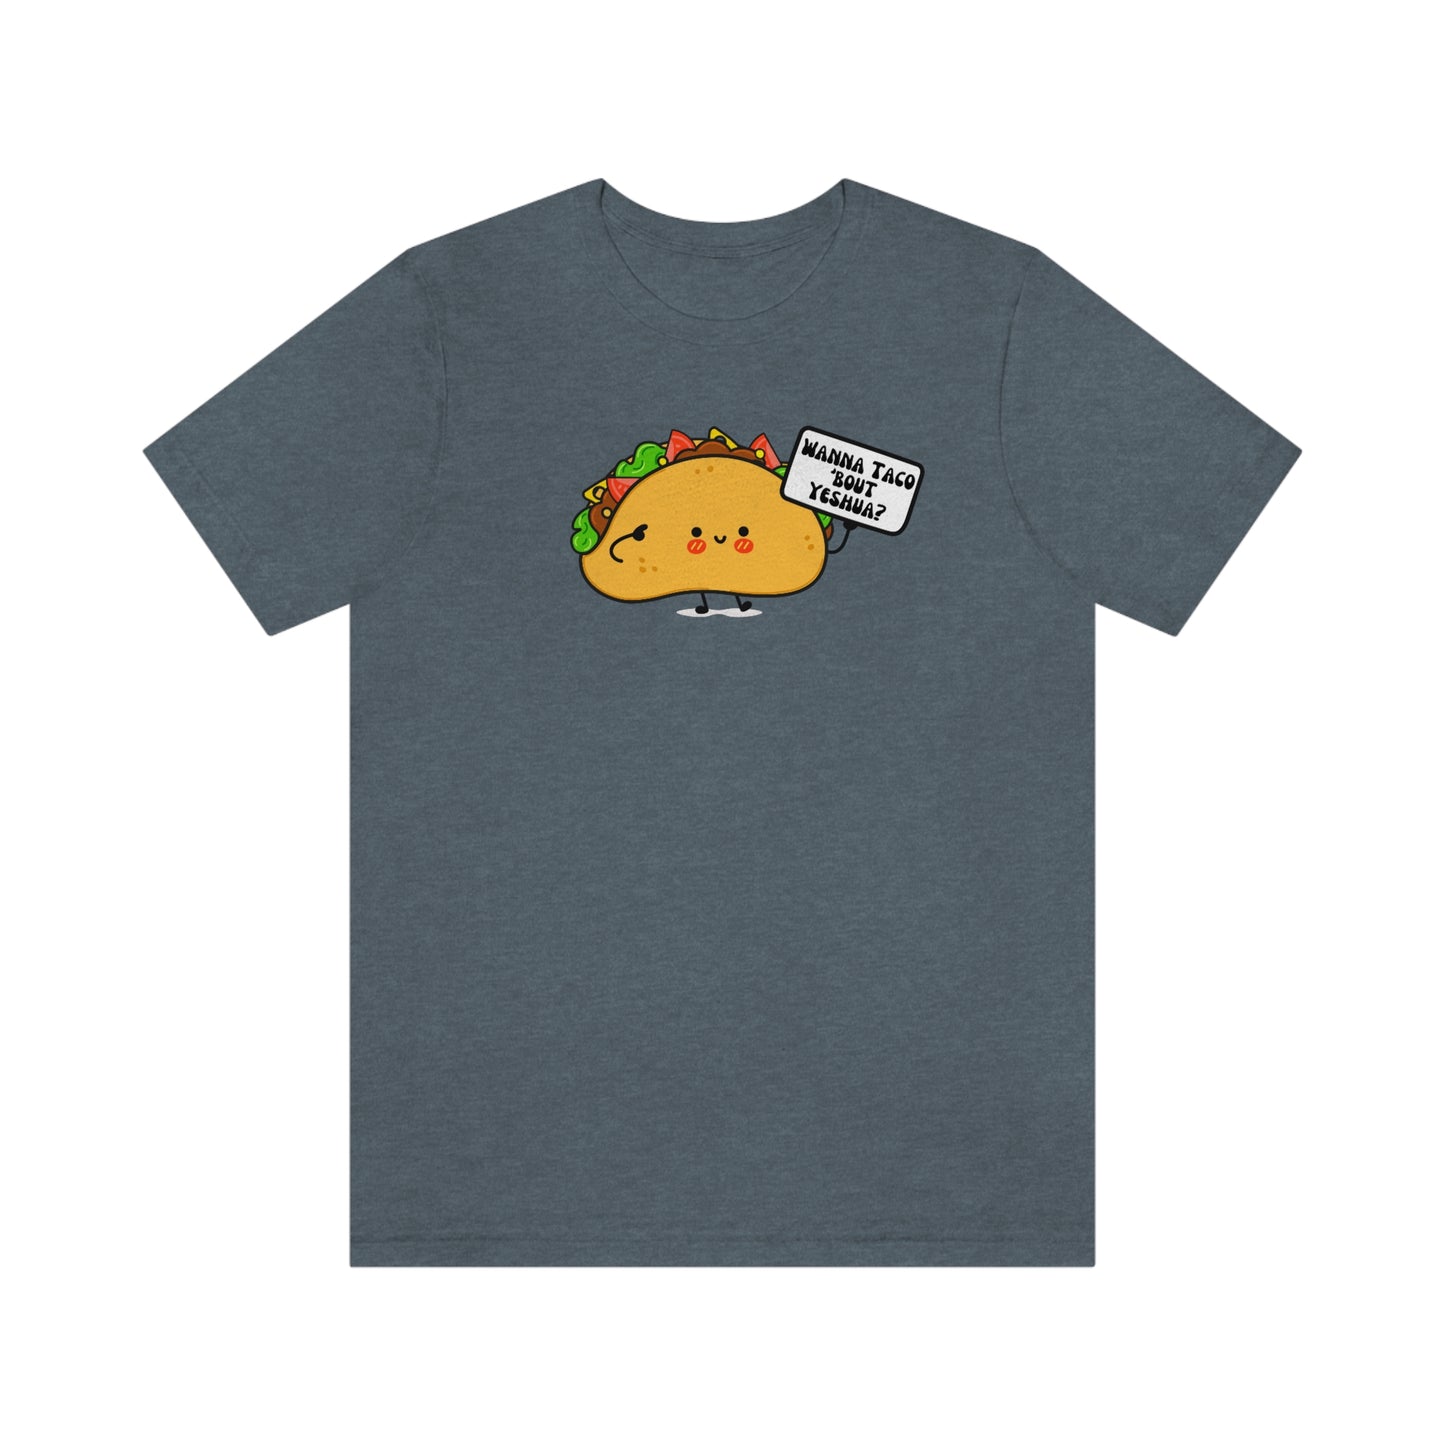 Wanna Taco 'Bout Yeshua Shirt